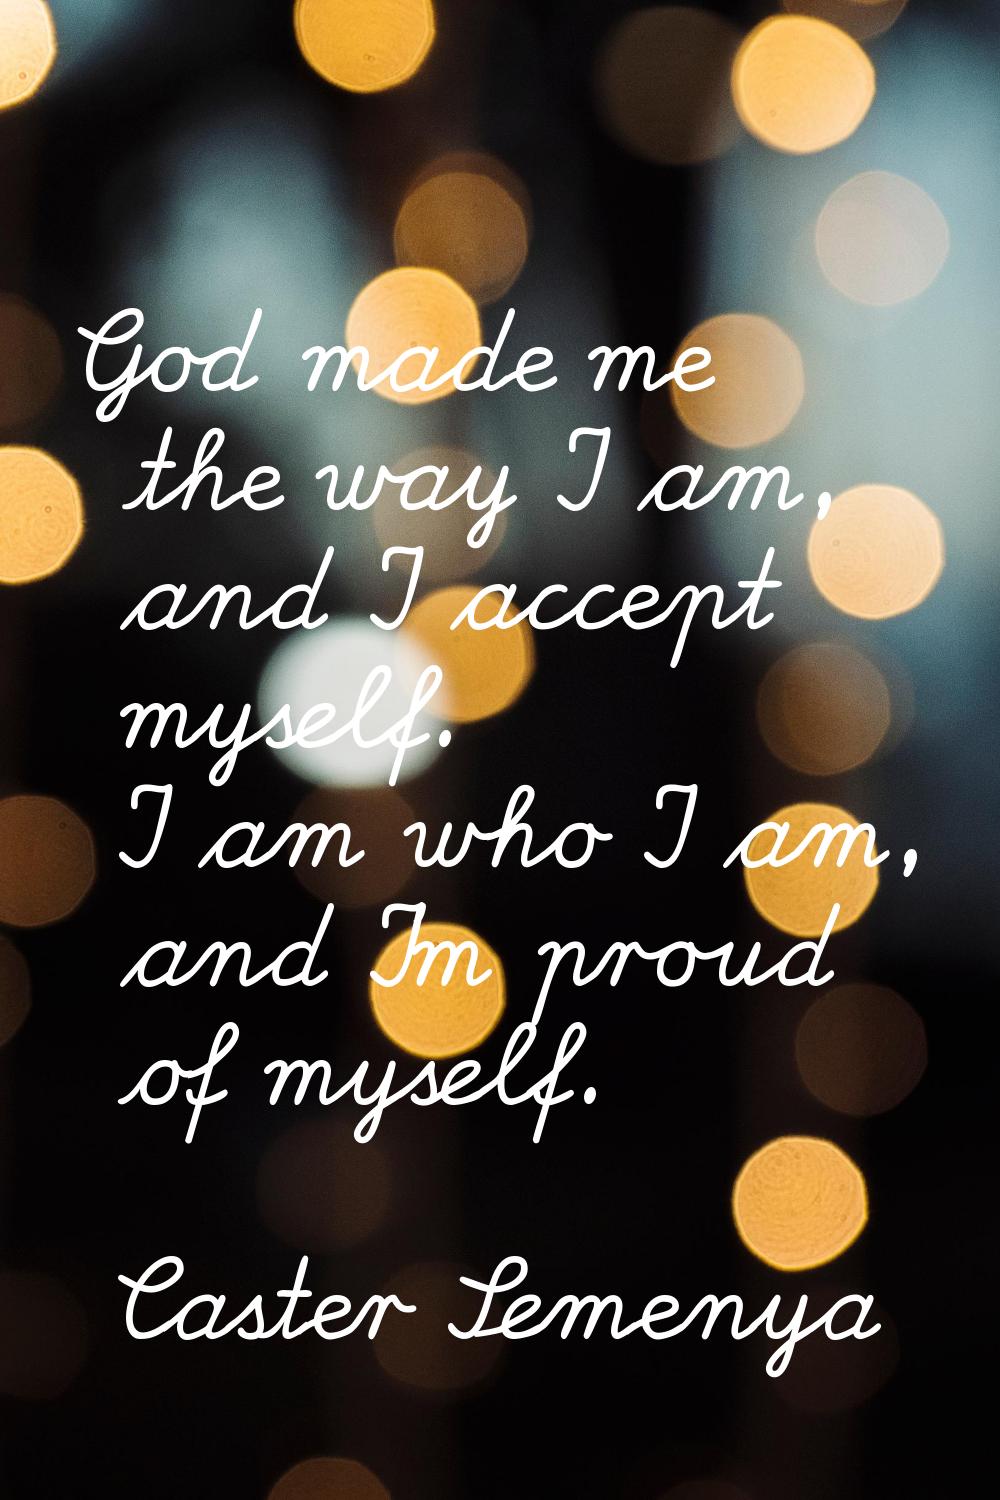 God made me the way I am, and I accept myself. I am who I am, and I'm proud of myself.